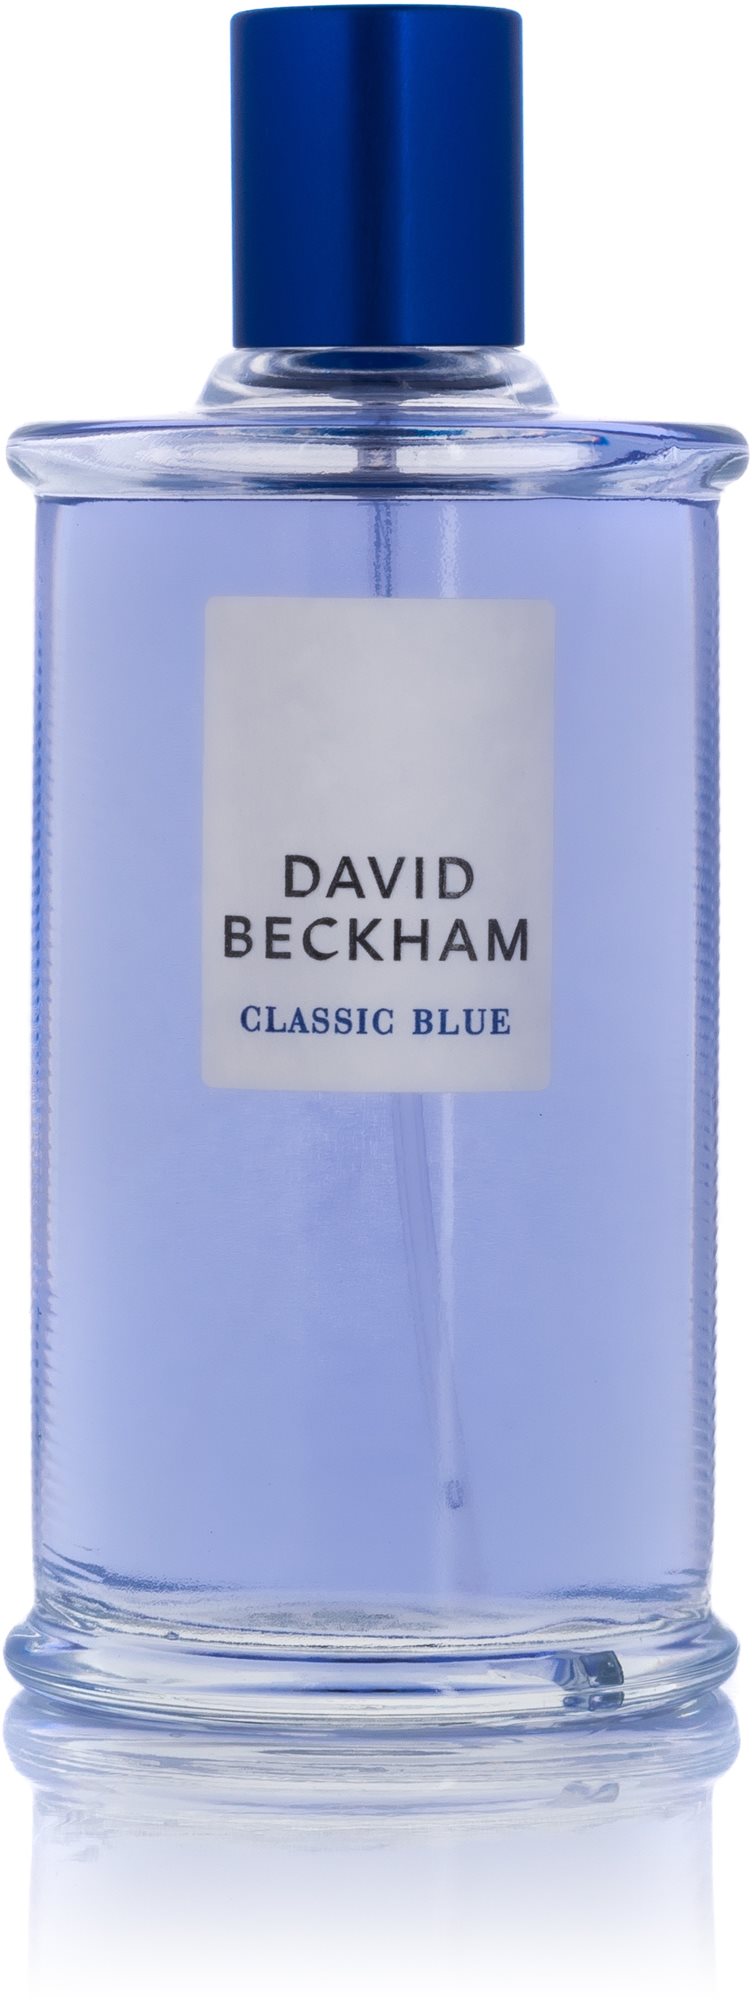 DAVID BECKHAM Clasic Blue EdT 100 ml